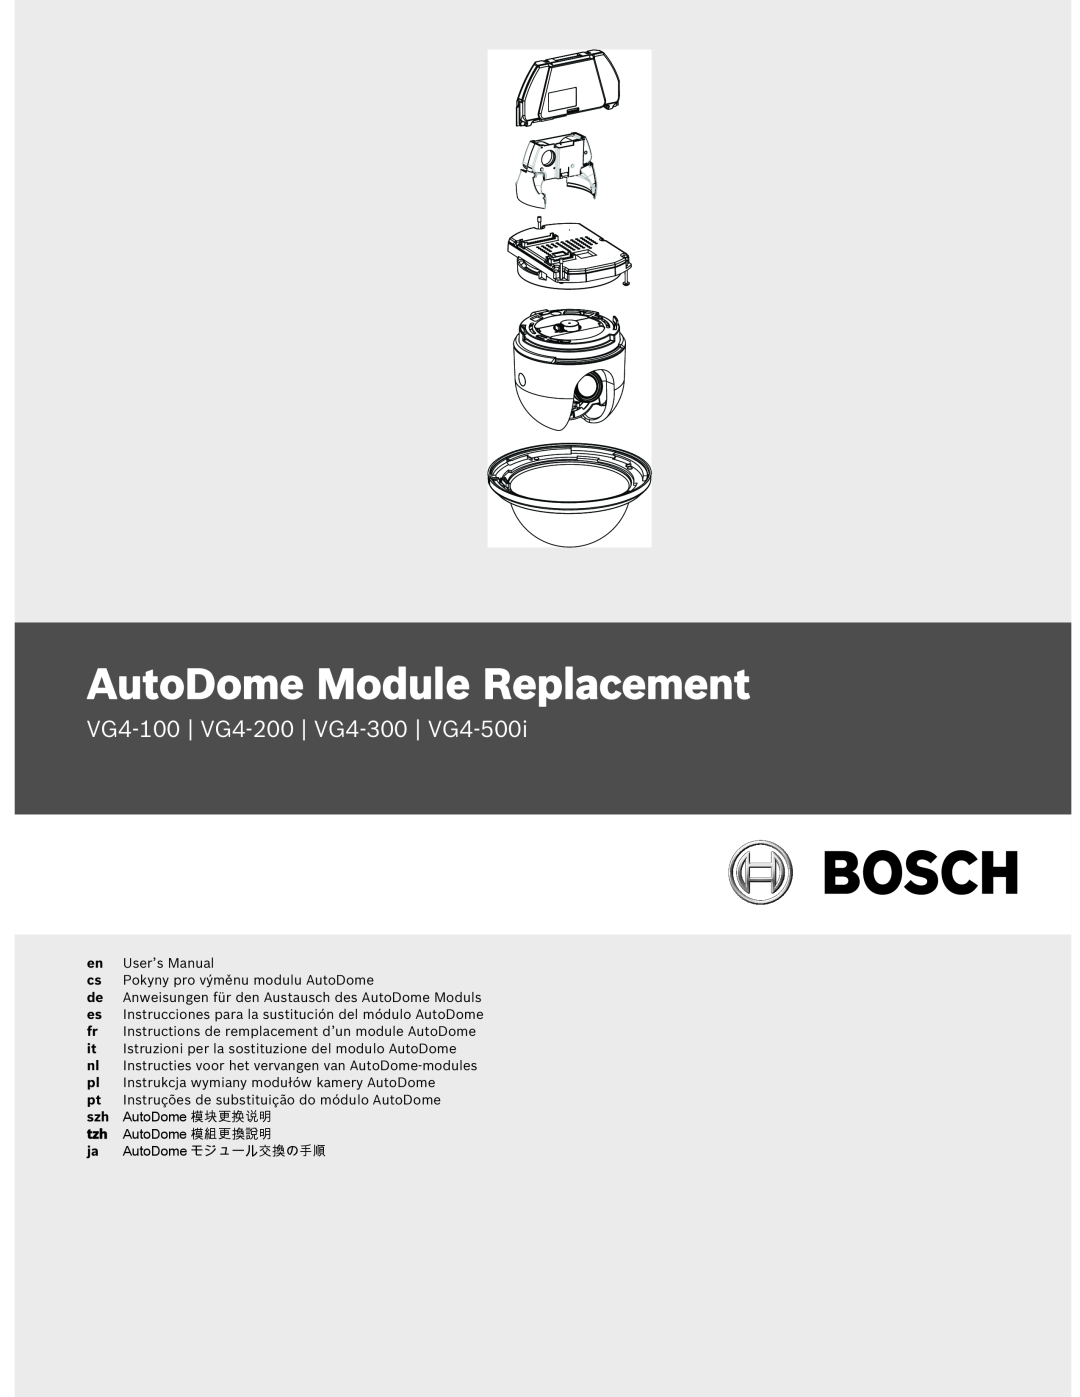 Bosch Appliances user manual AutoDome Modular Camera System, VG4-100Series, en User’s Manual 